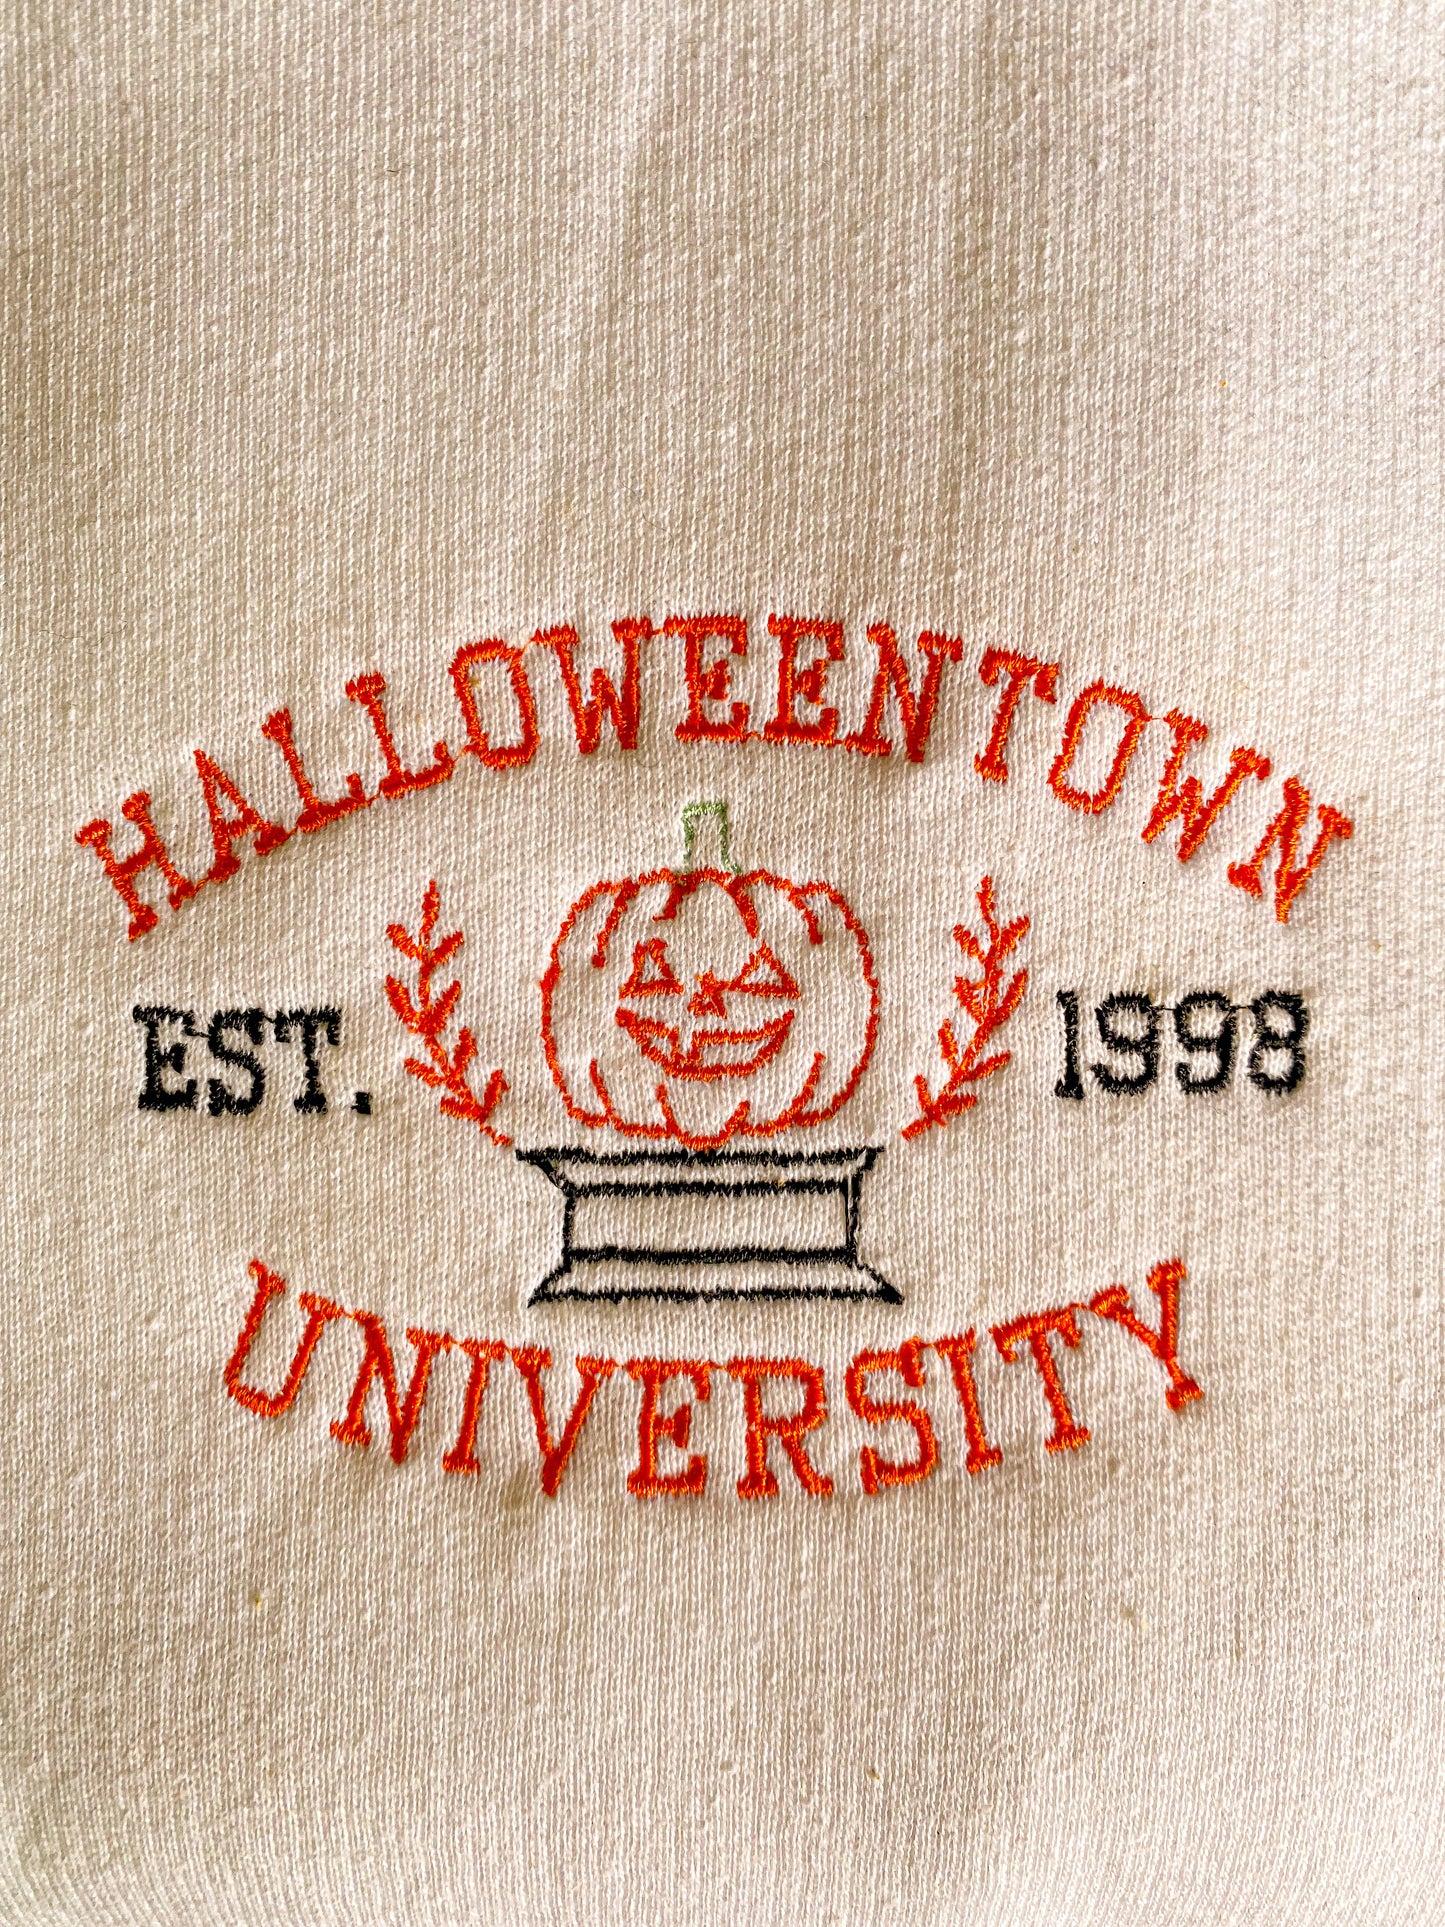 Halloween Town Embroidered Crewneck